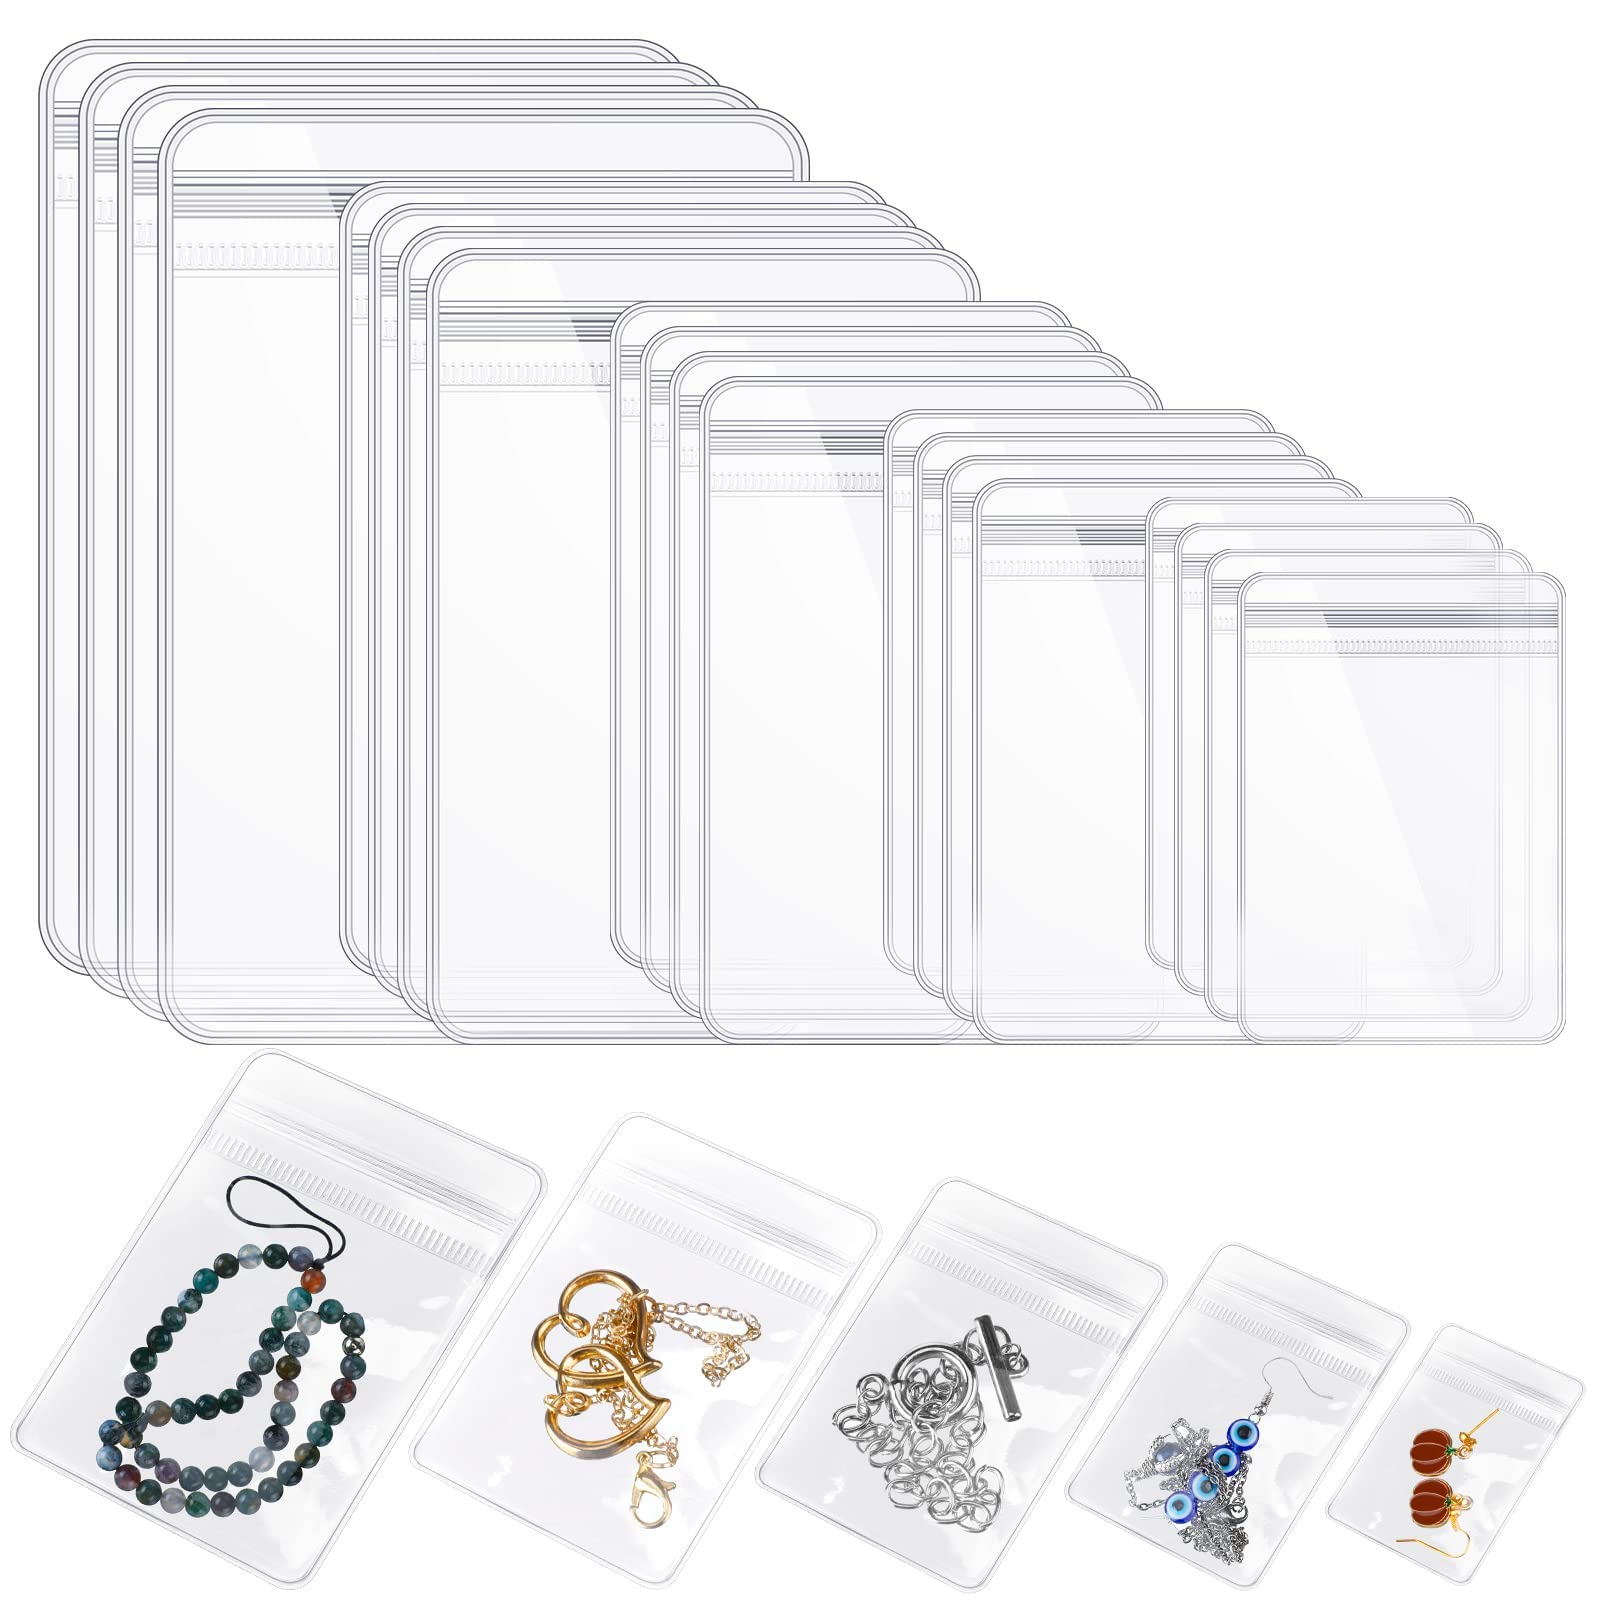 Transparent Plastic Pouch Jewelry